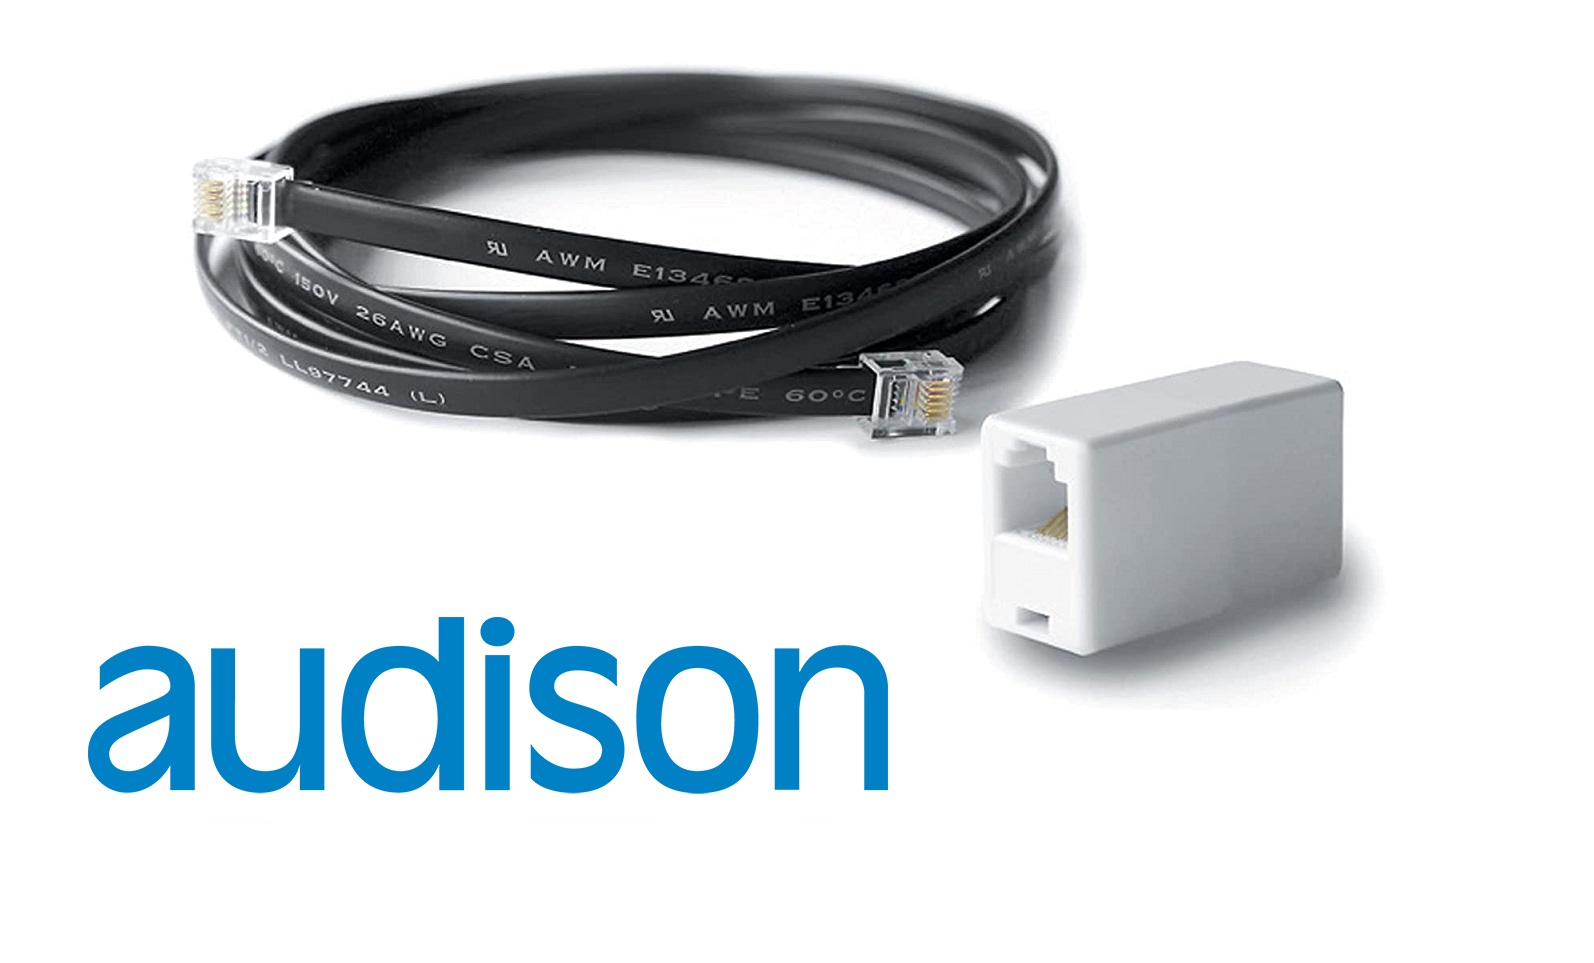 Audison ECK DRC - Verlängerungskabel Set 2m Kabel und Adapter EXTENSION CABLE KIT 2mCABLE + ADAPTER